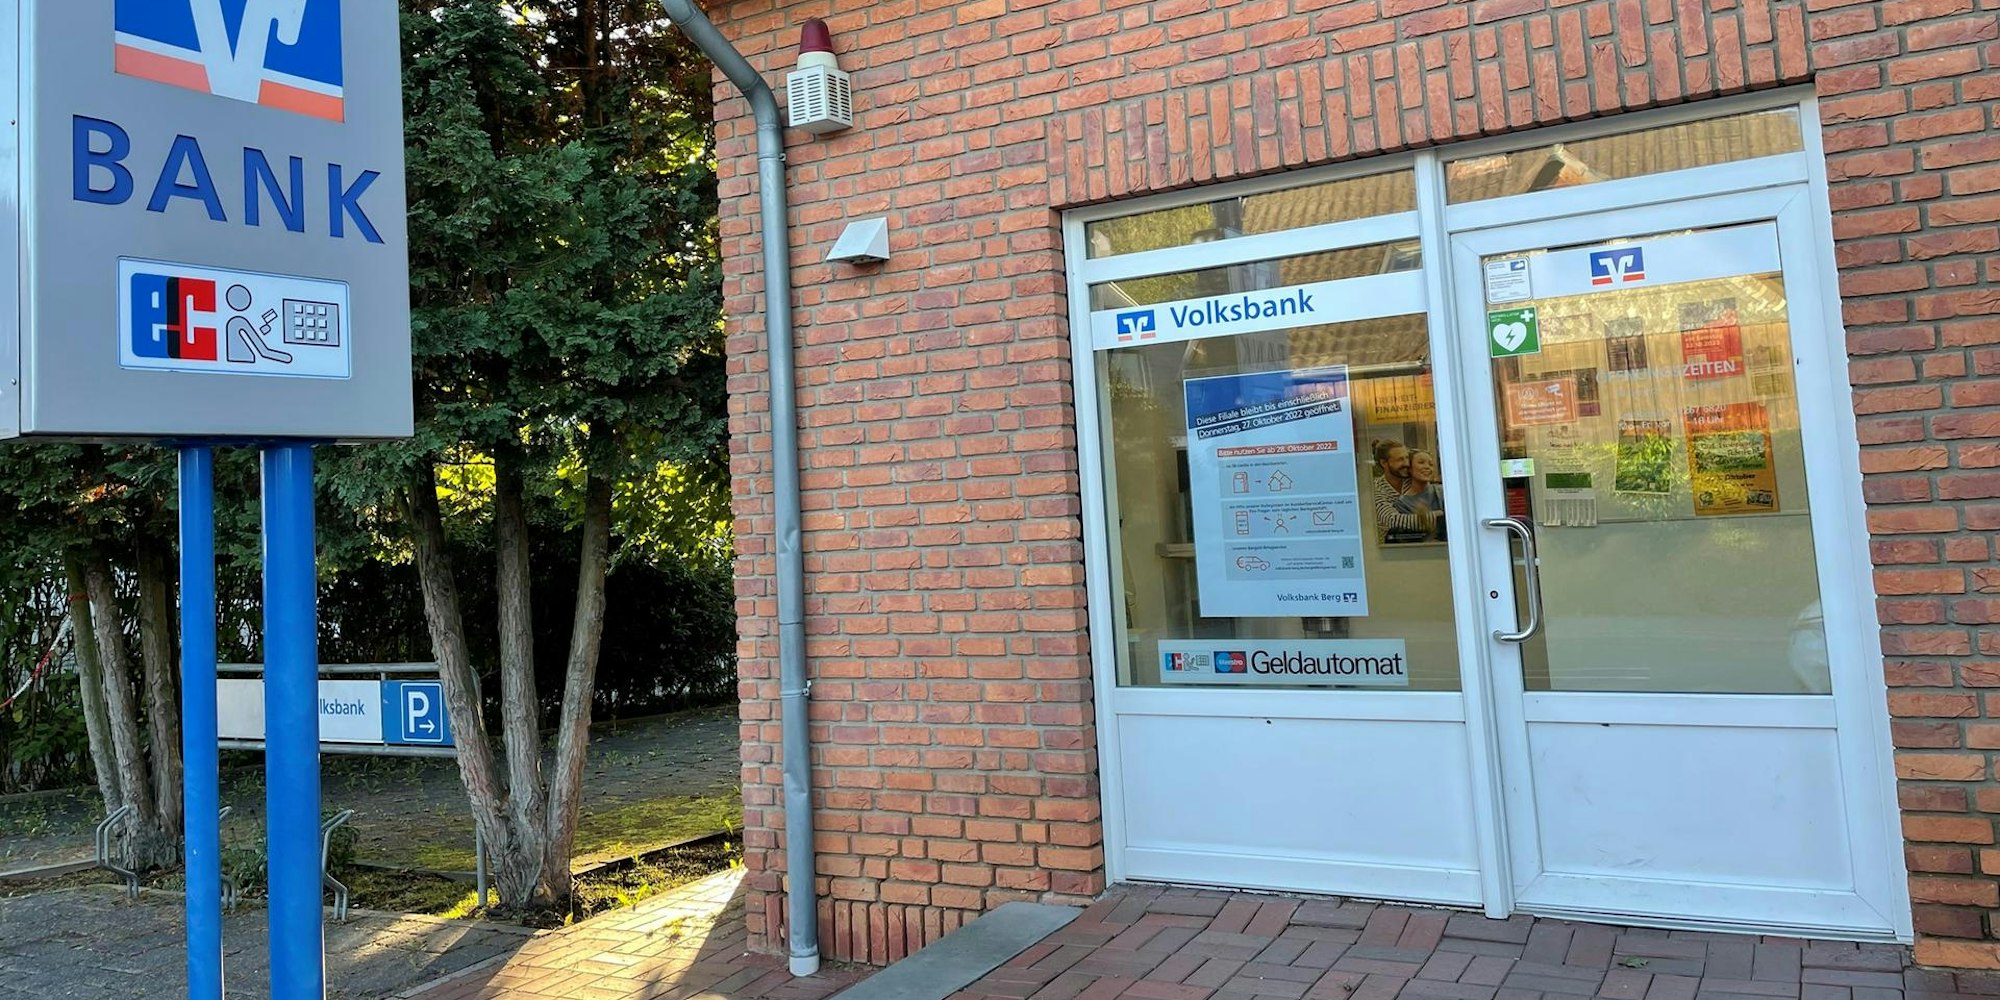 volksbank1